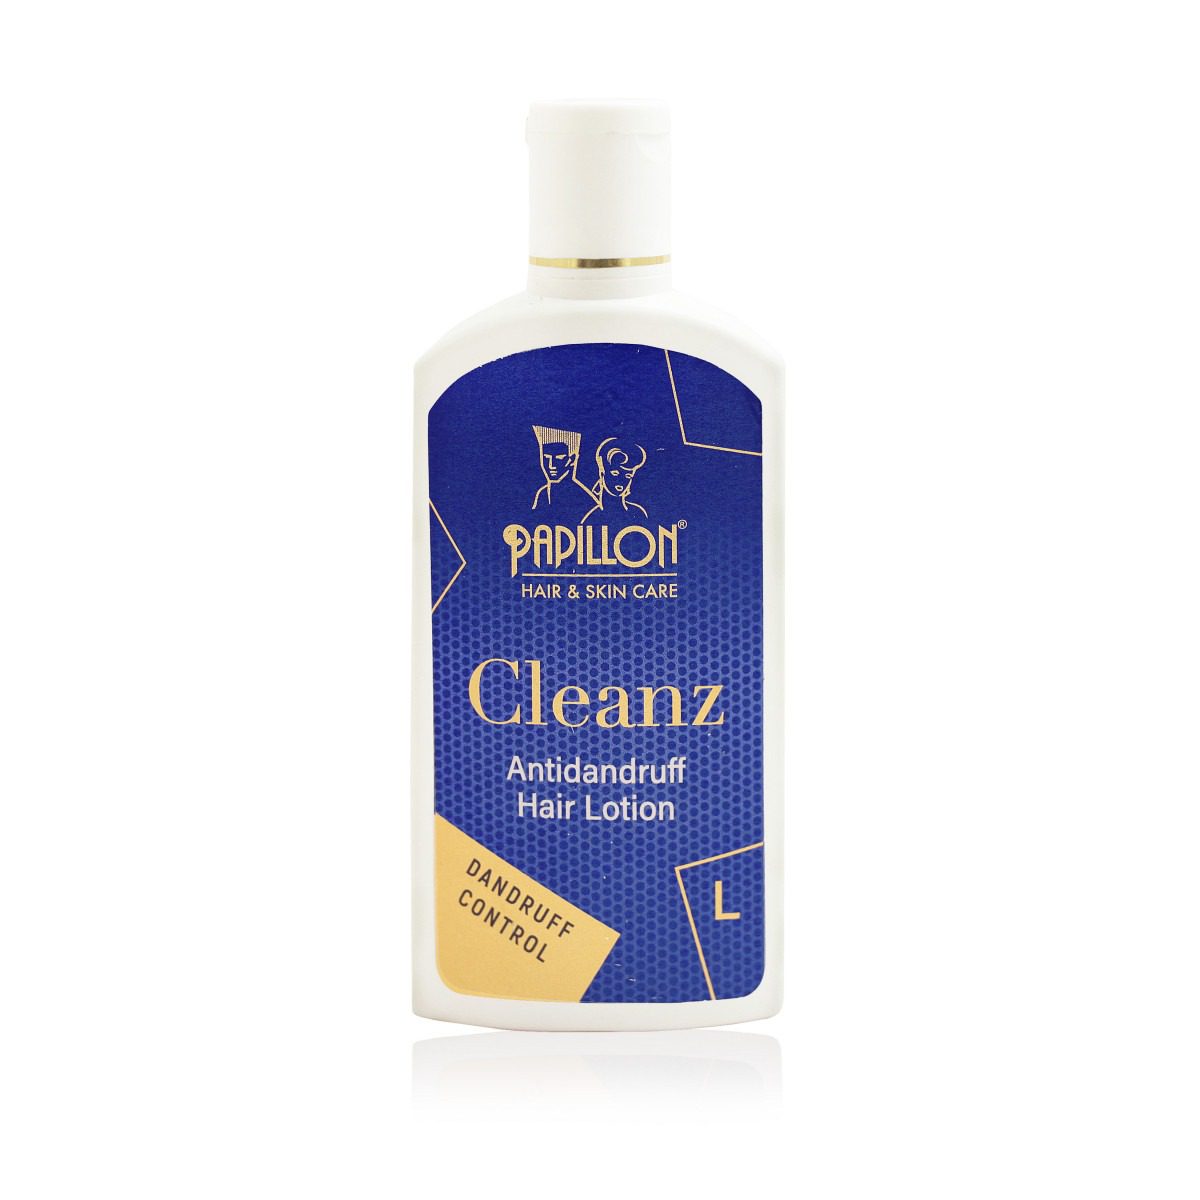 cleanz antidandraff hair lotion